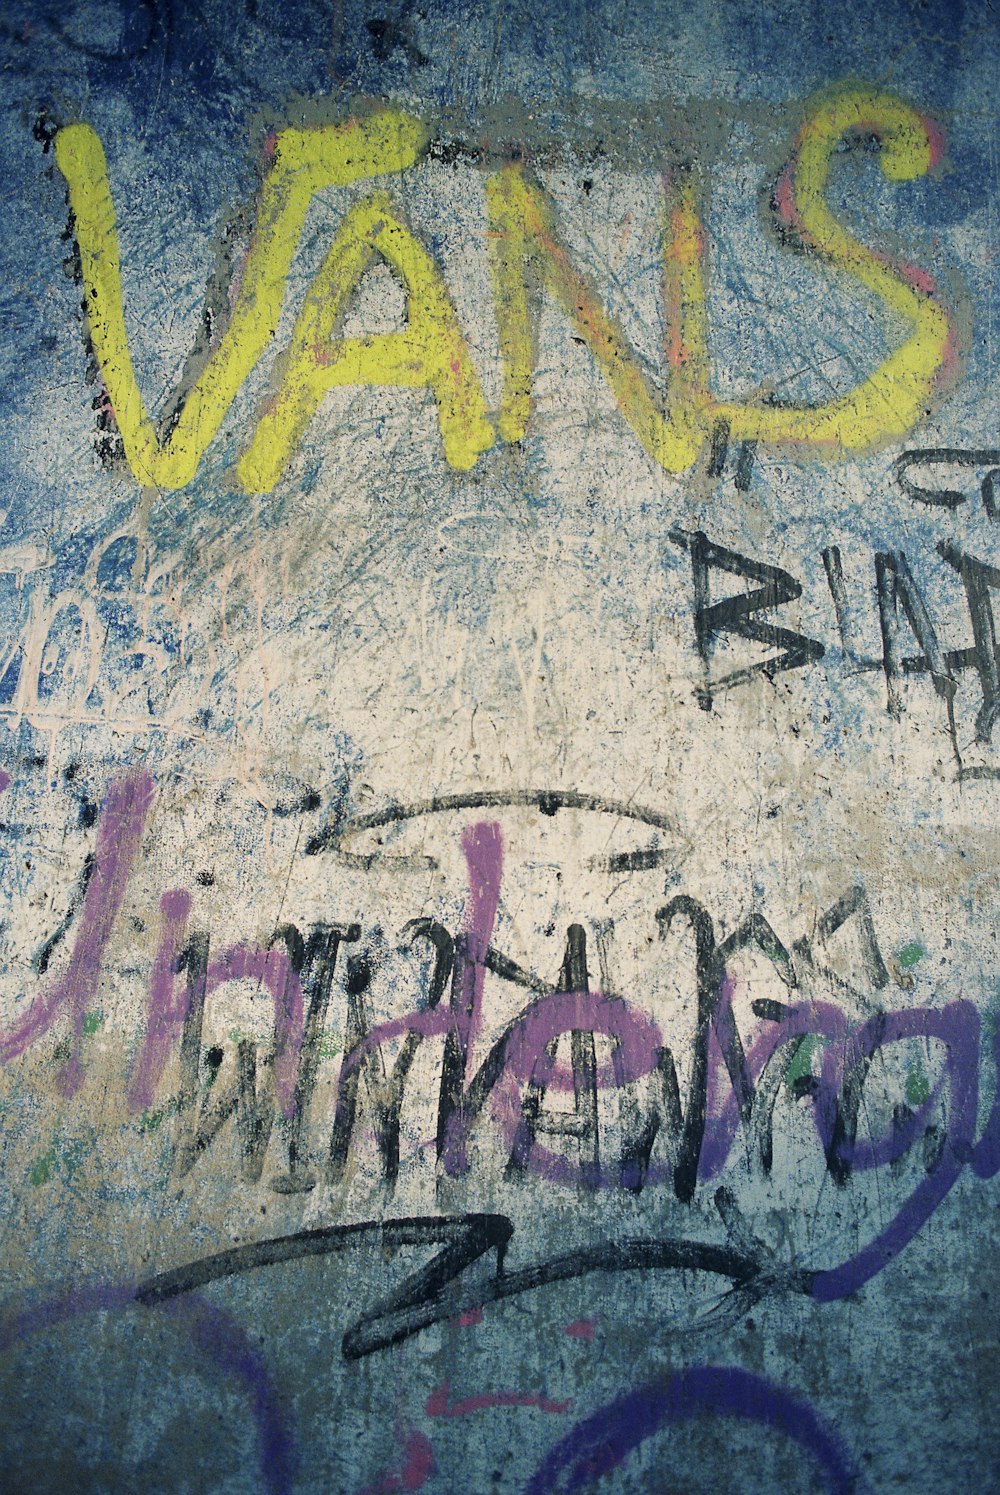 Vans logo graffiti photo – Free Close up Image on Unsplash